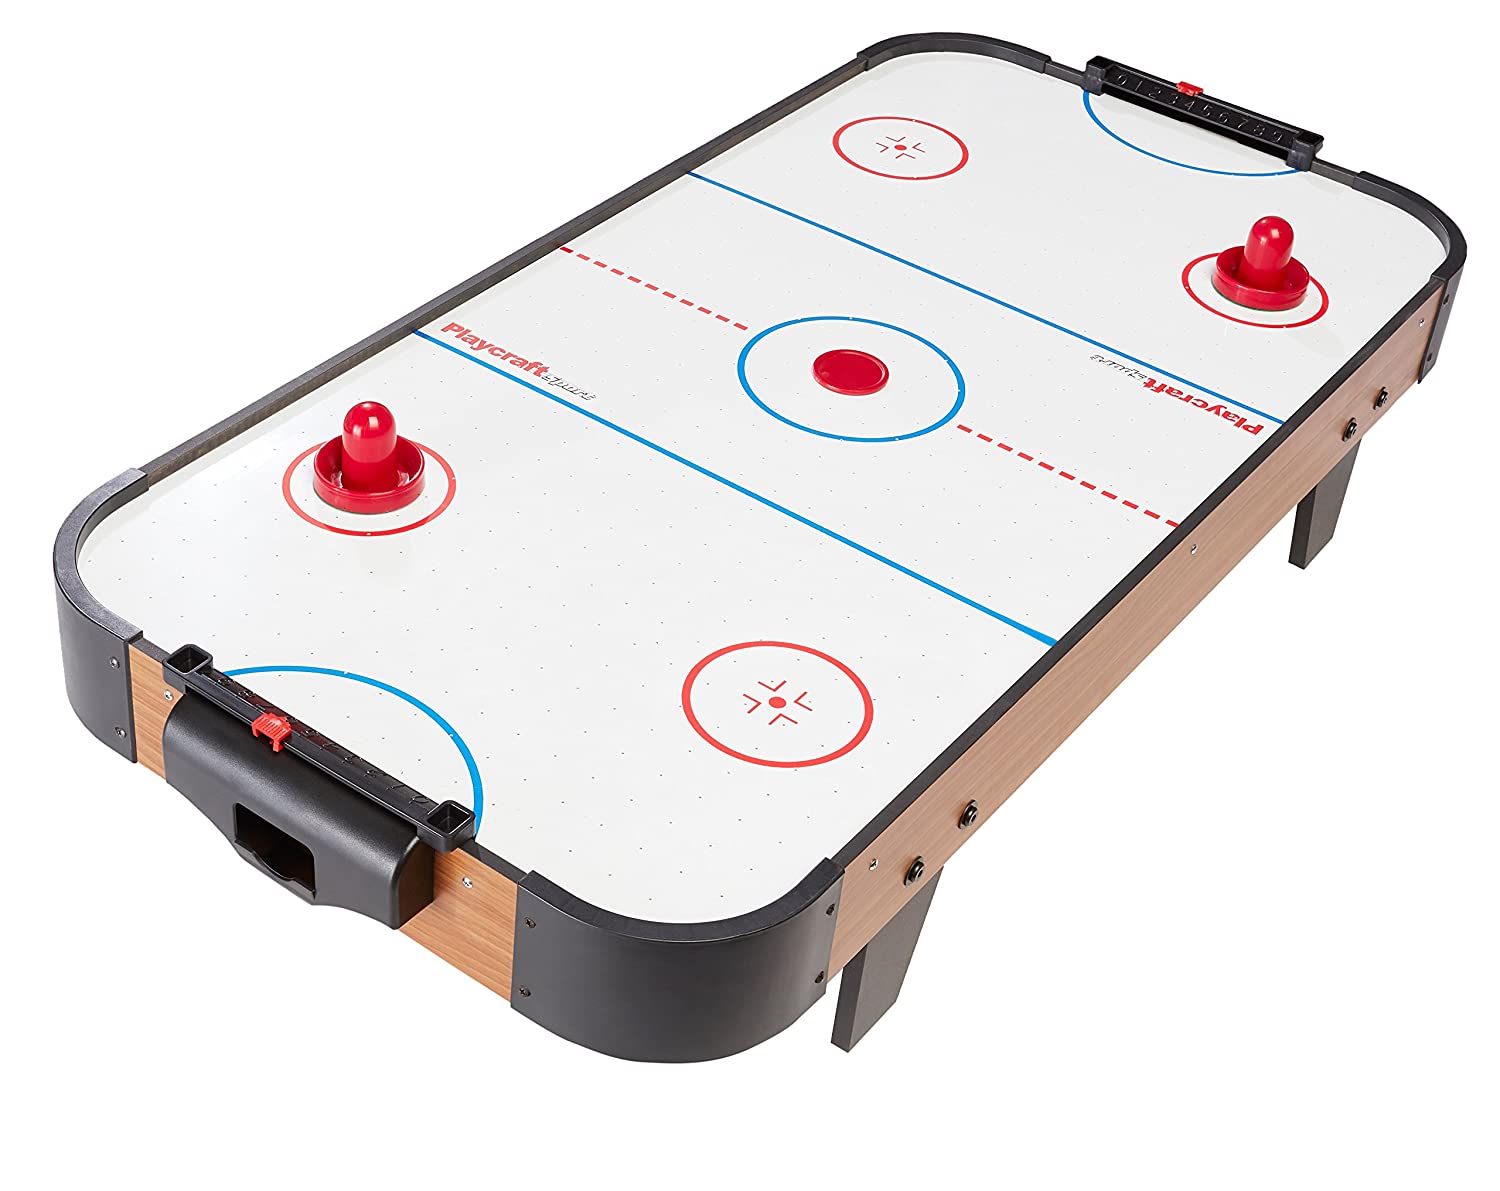 Playcraft Sport 40-Inch Table Top Air Hockey